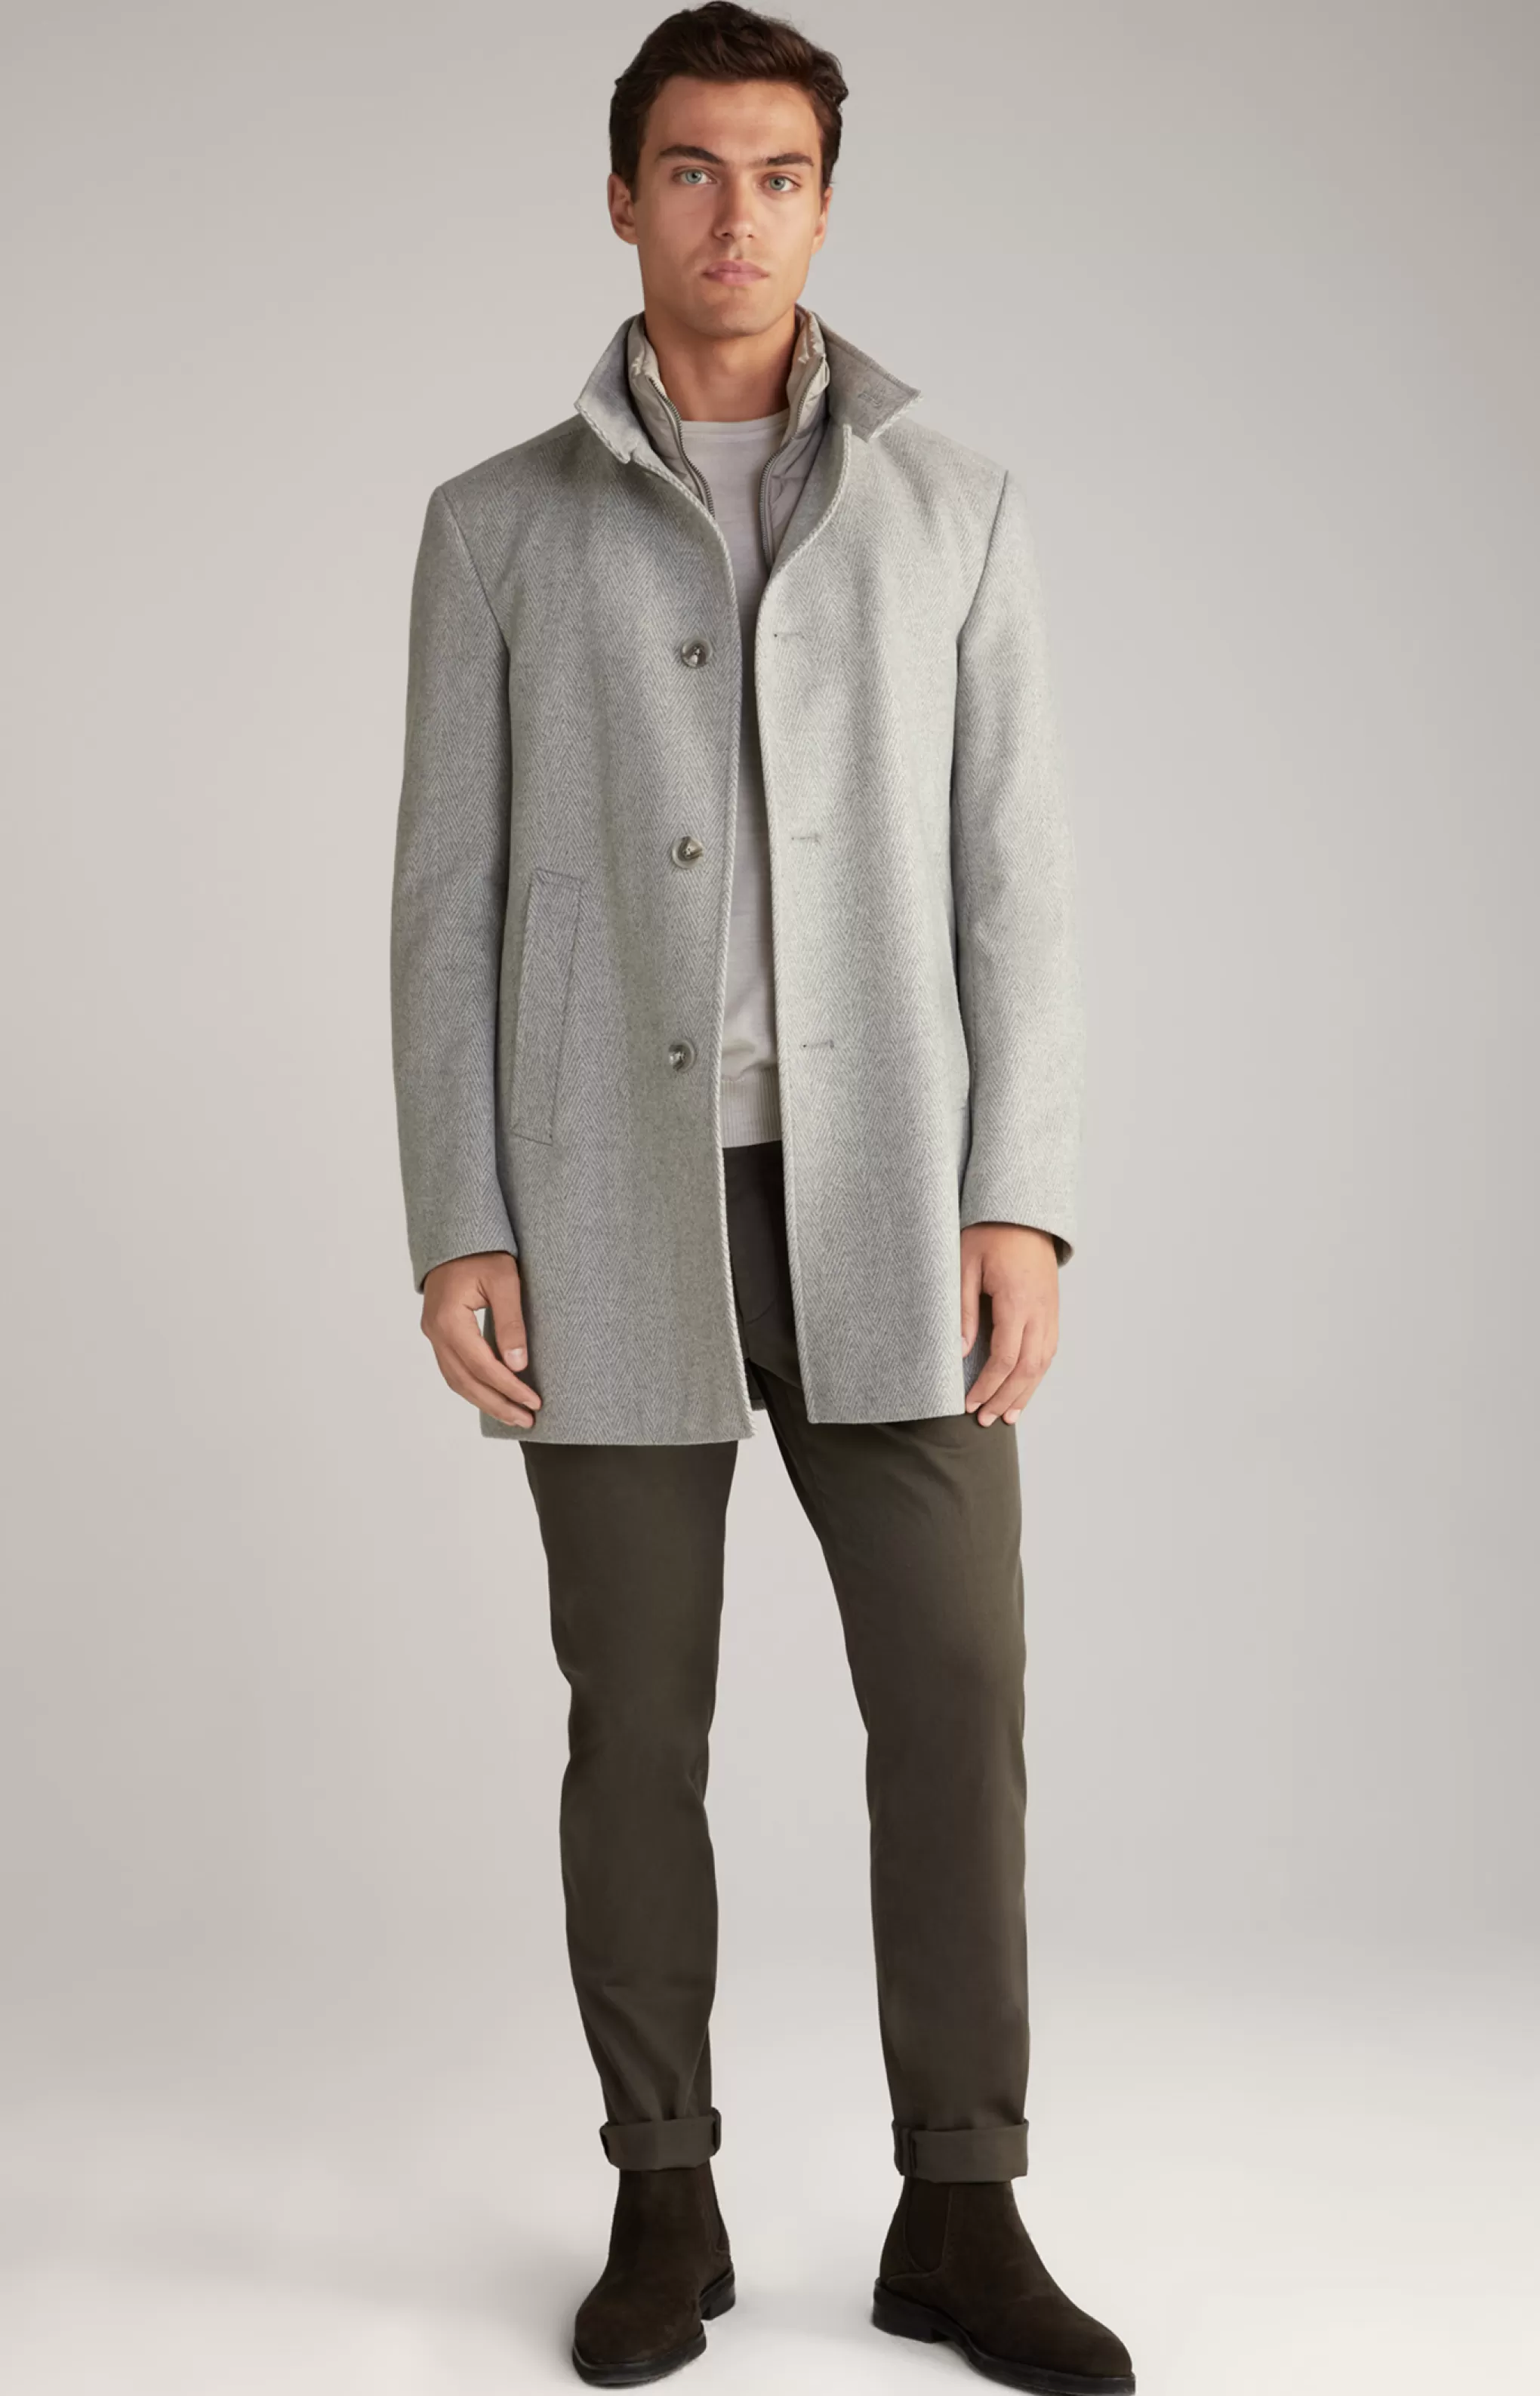 Coats | Clothing*JOOP Coats | Clothing Maico Coat in a Light Beige Pattern